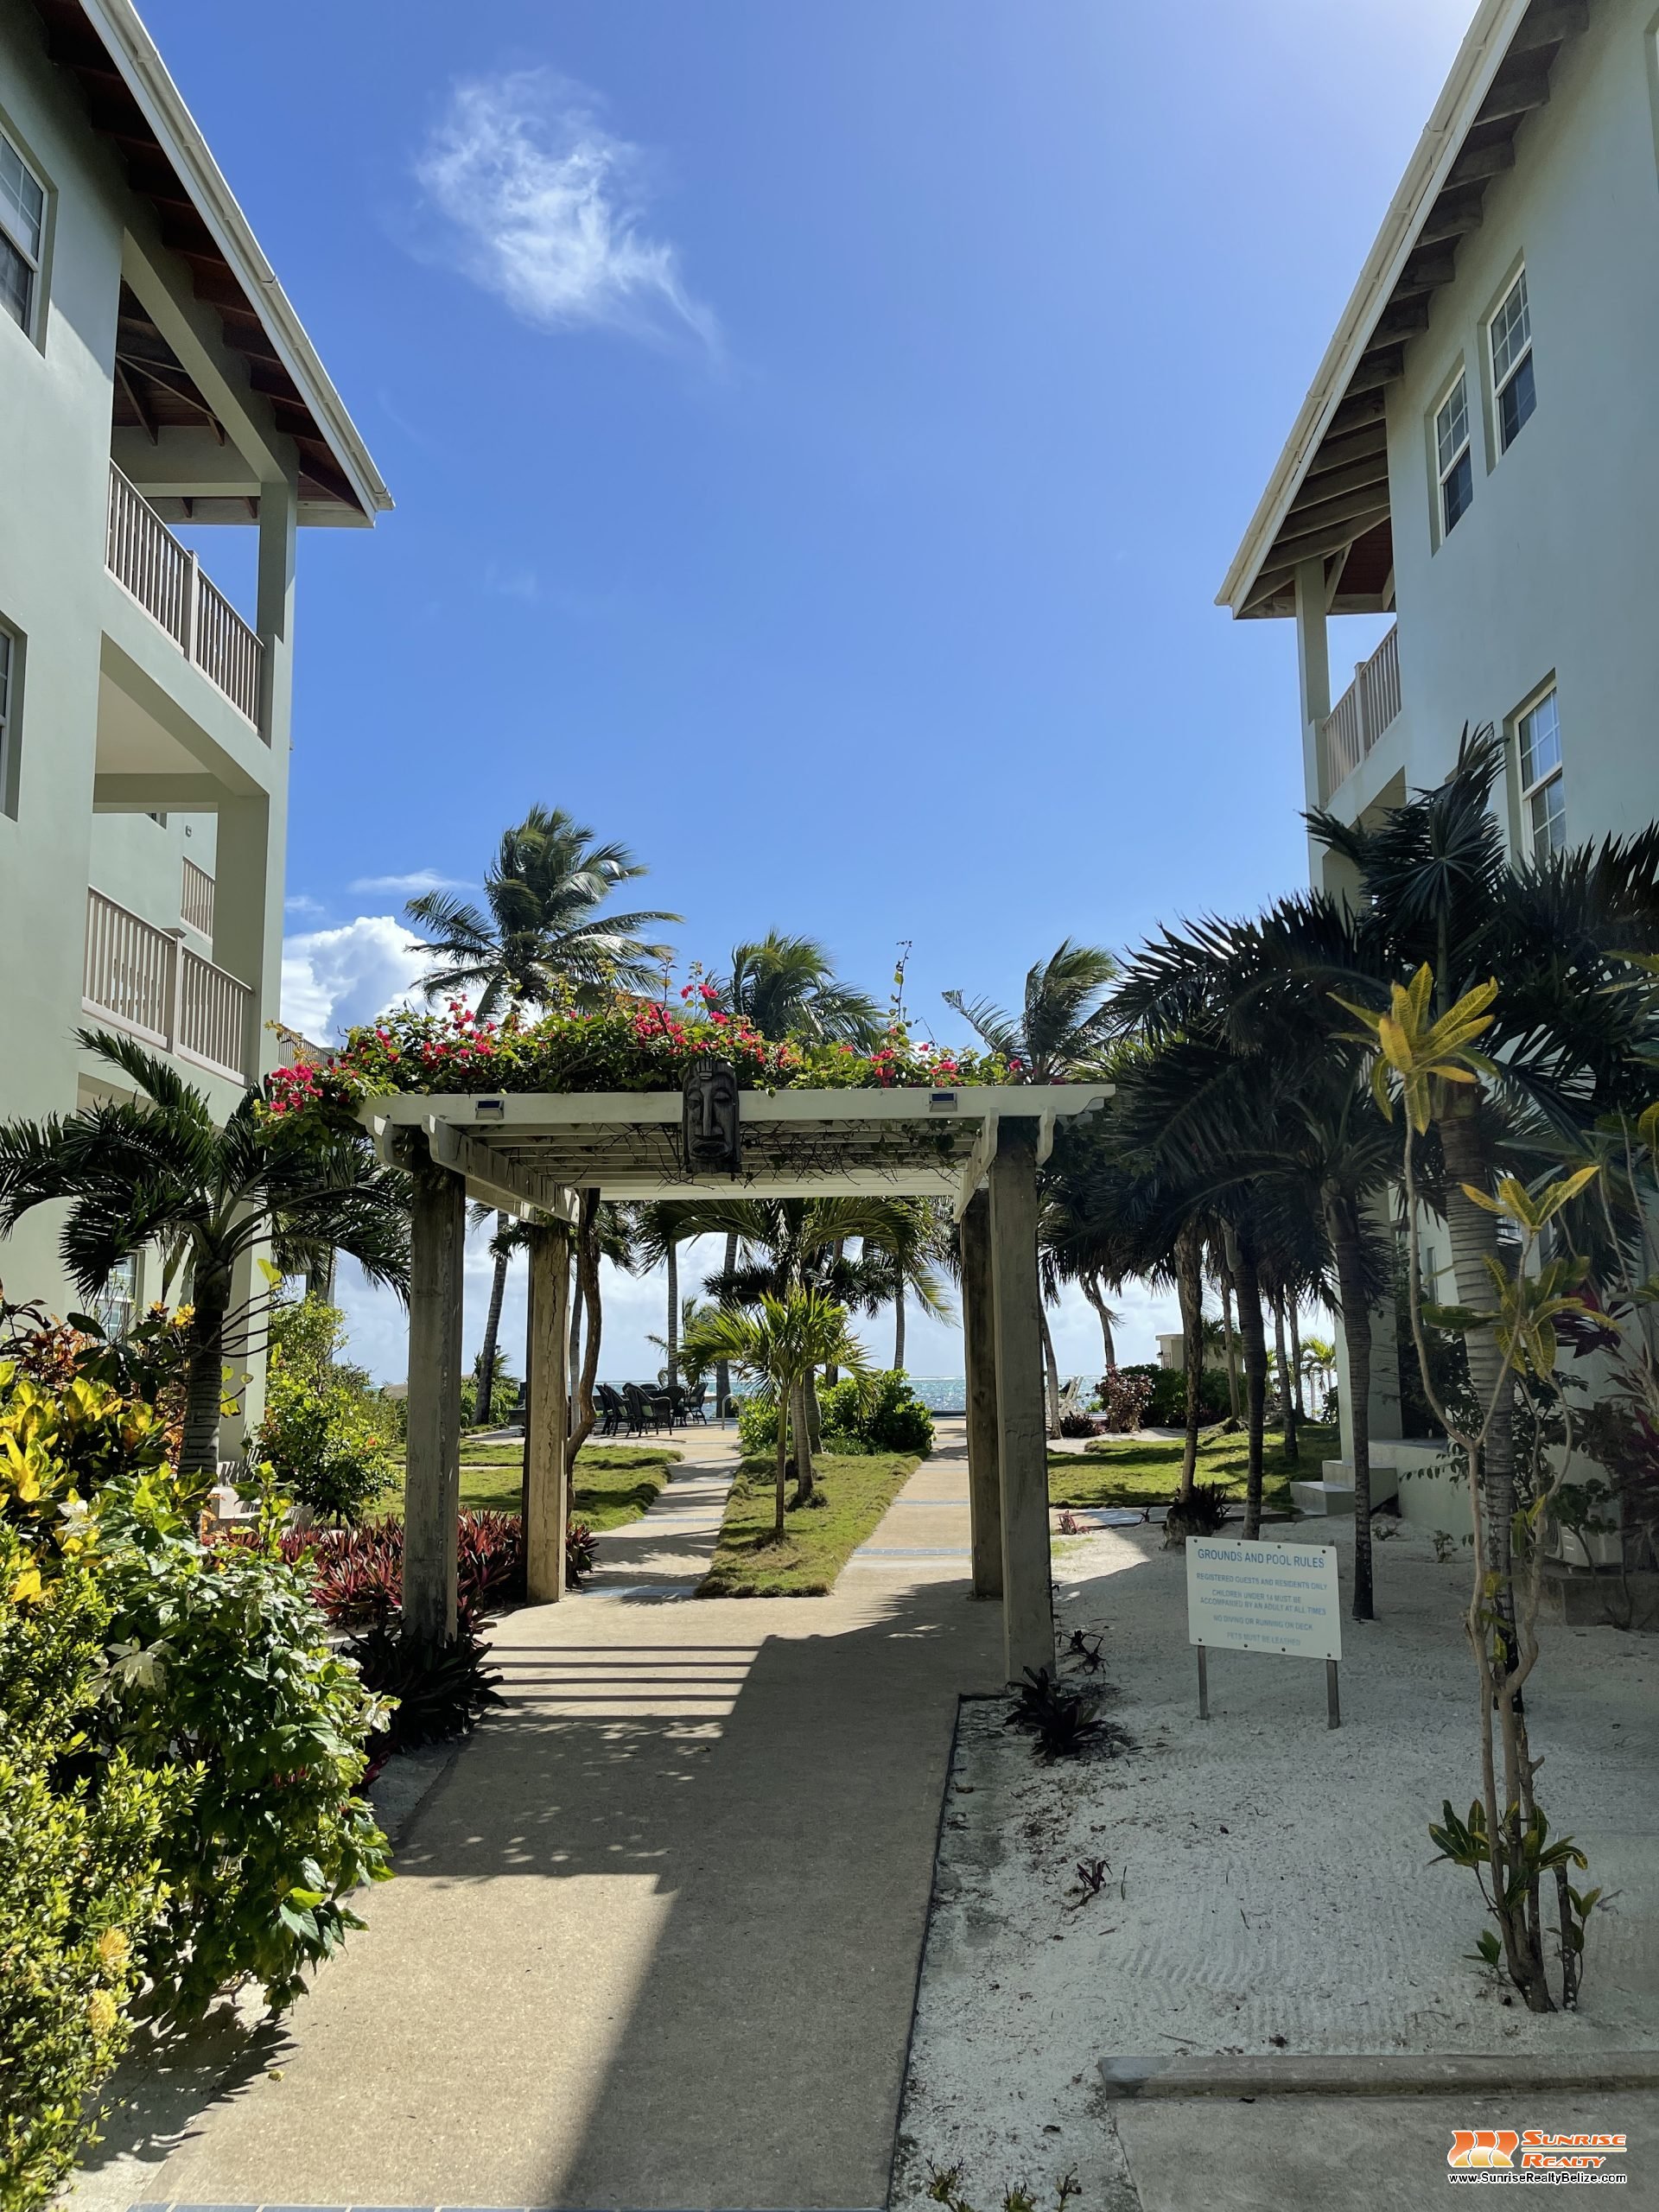 Bermuda Beach D1 – New Listing!